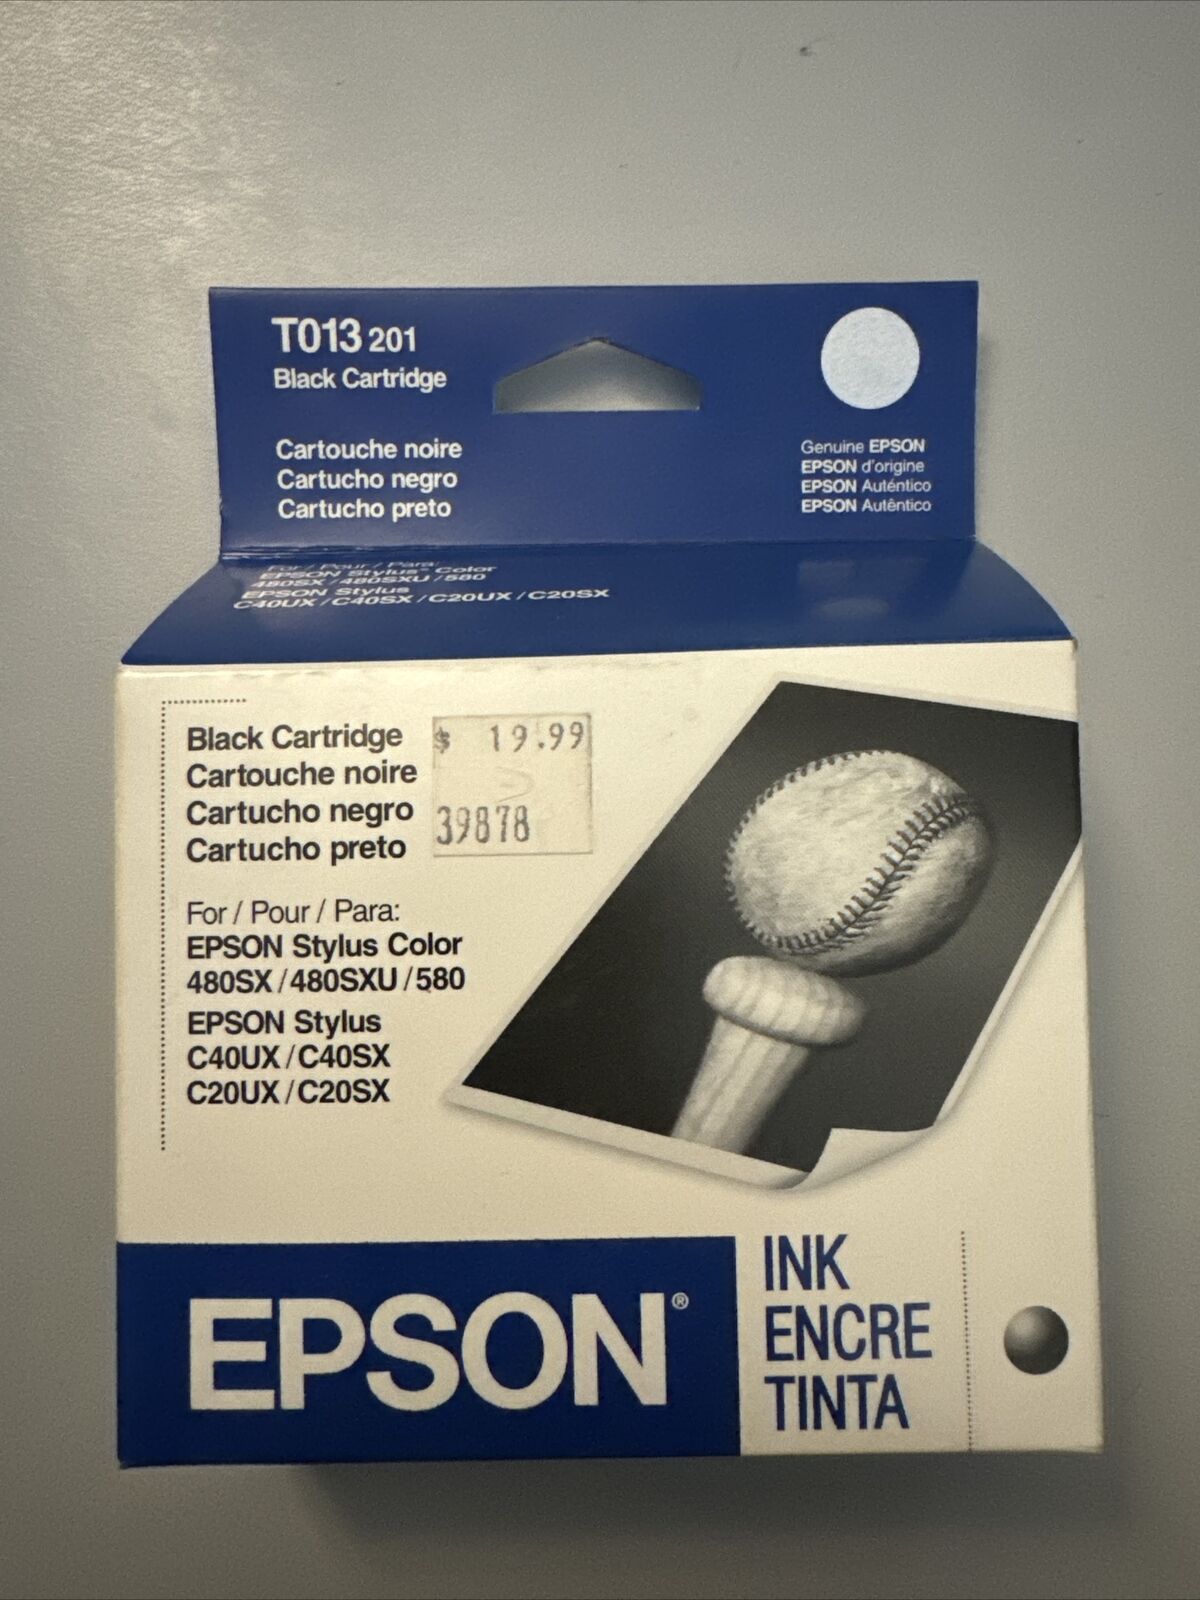 Epson T013 201 Genuine Black Ink Cartridge Expired